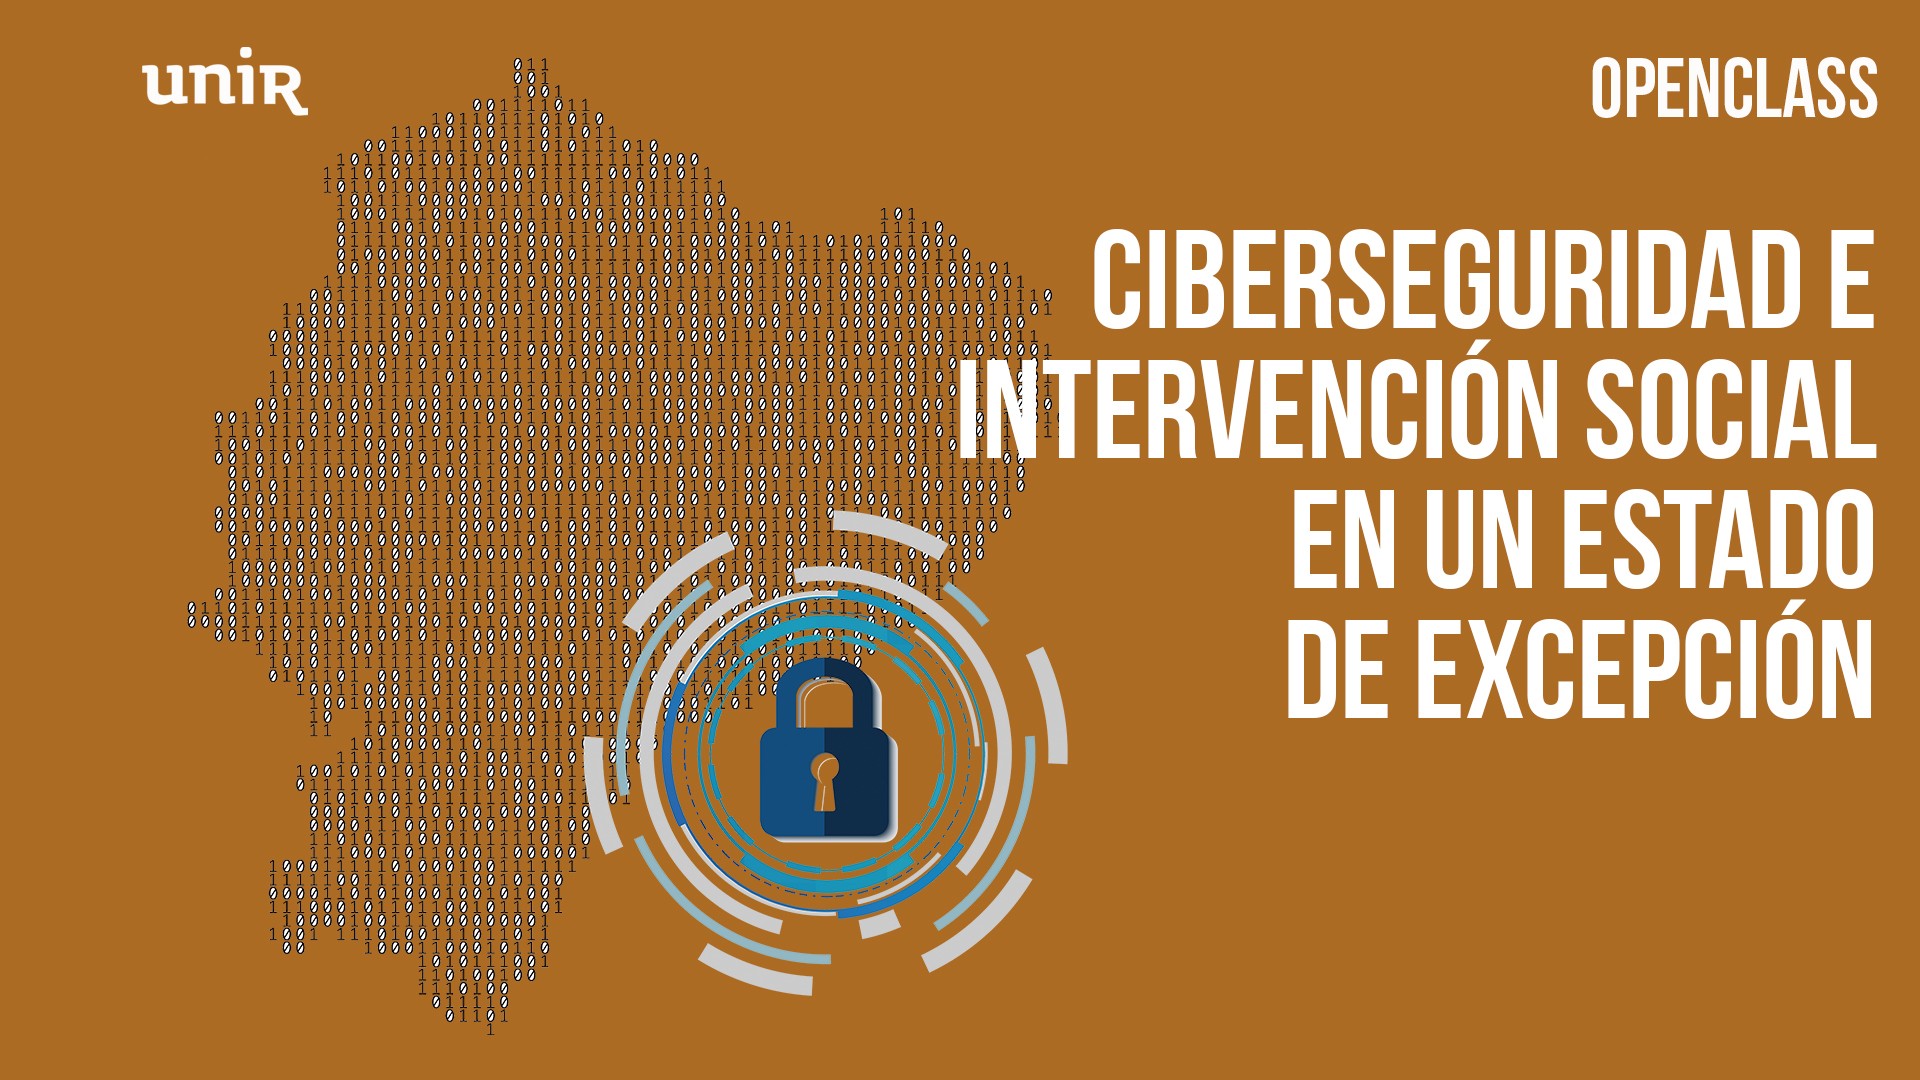 Openclass MIDENA & FFAA | Ciberseguridad e Intervención social en un estado de excepción